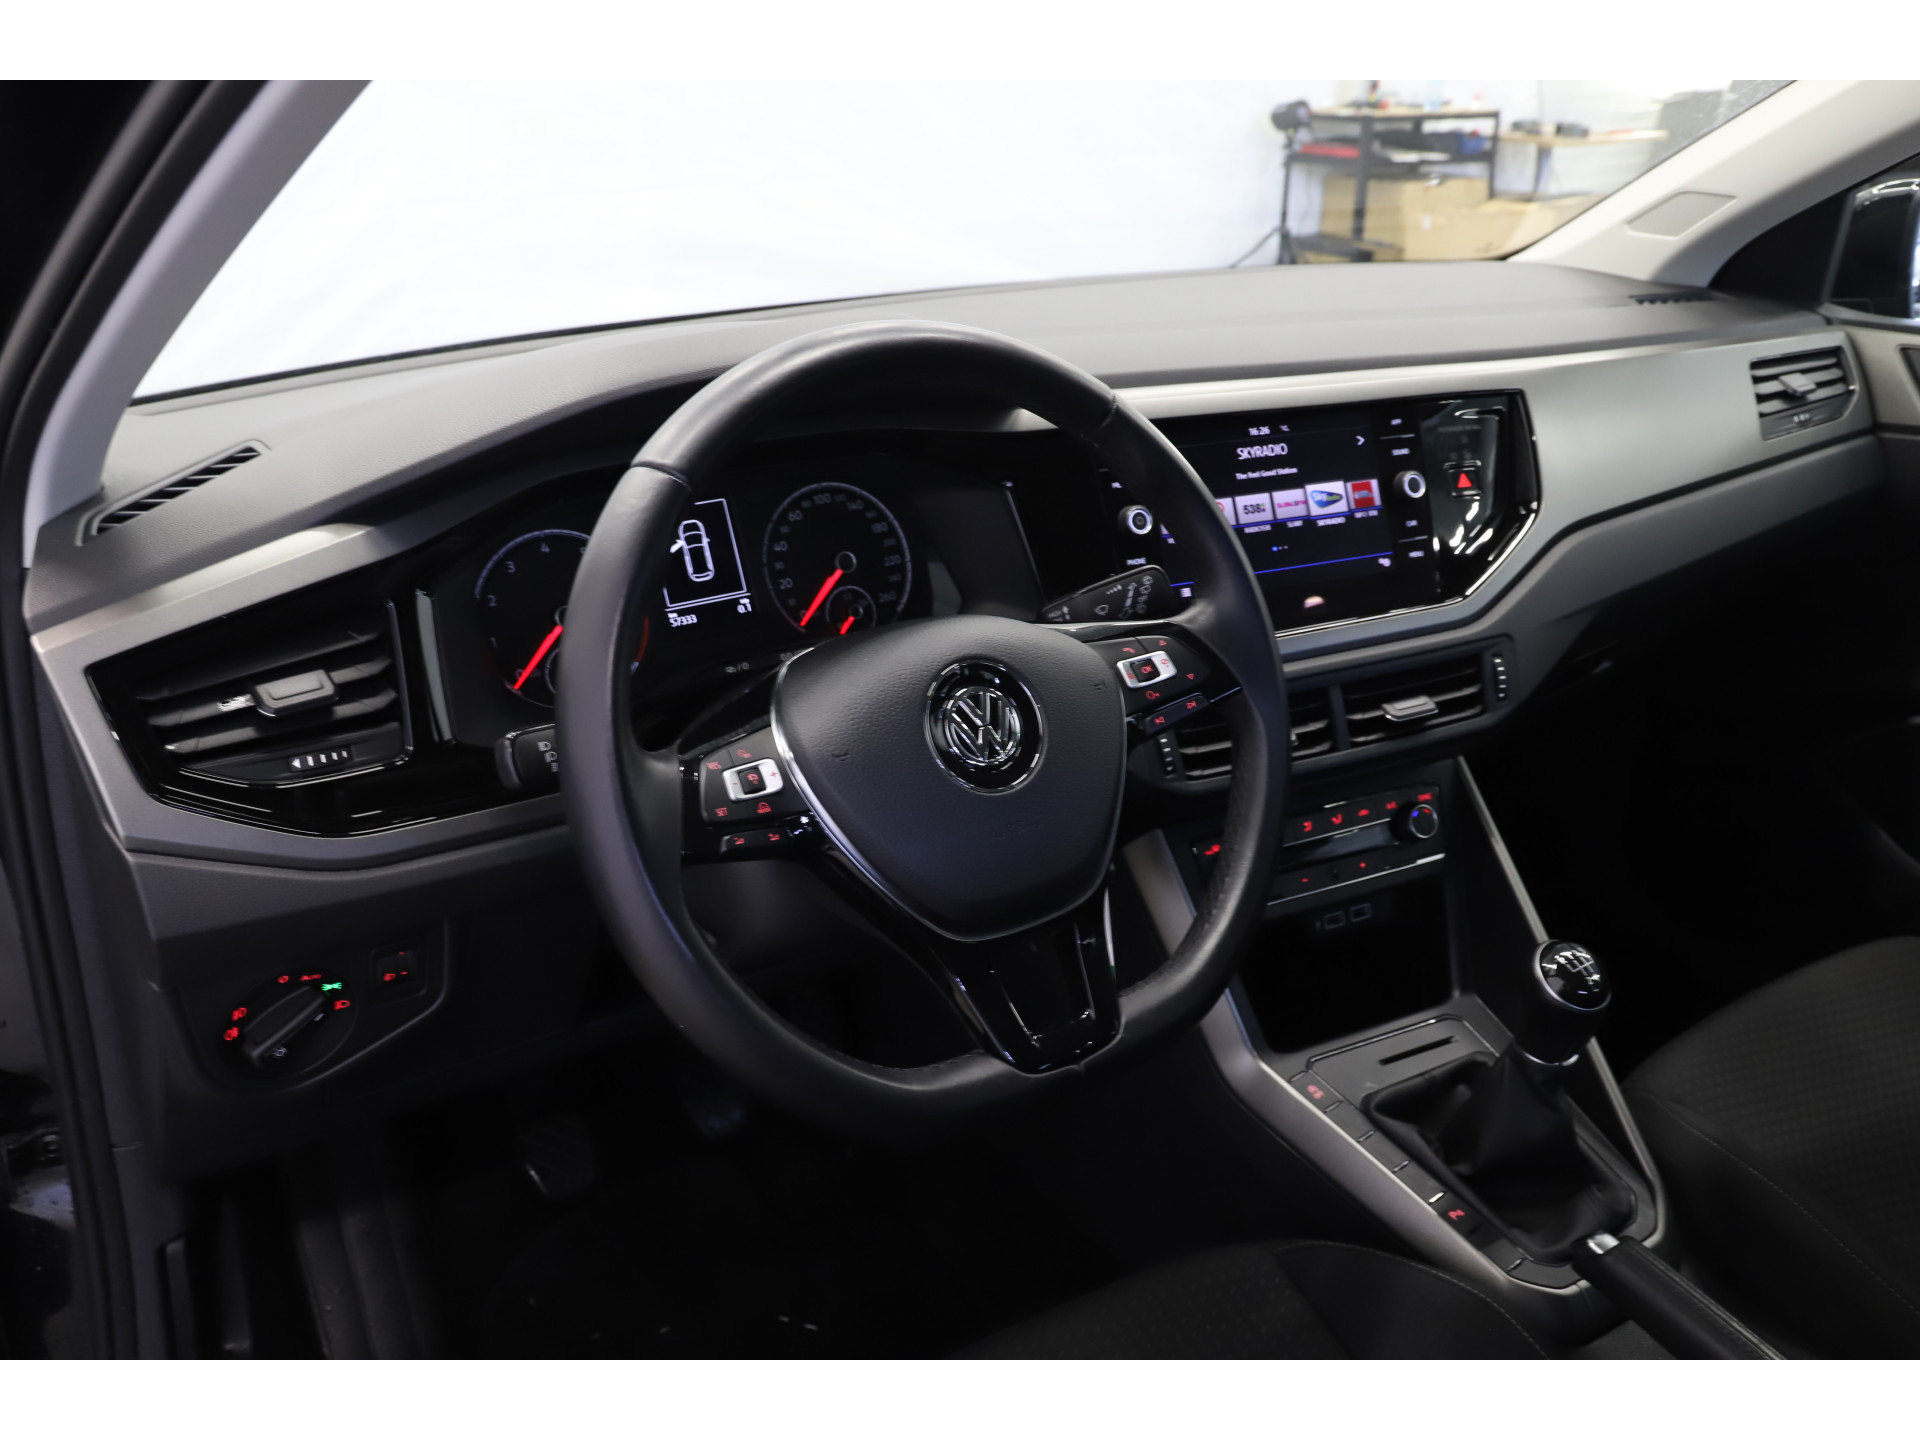 Volkswagen - Polo 1.0 TSI 95pk Comfortline - 2017